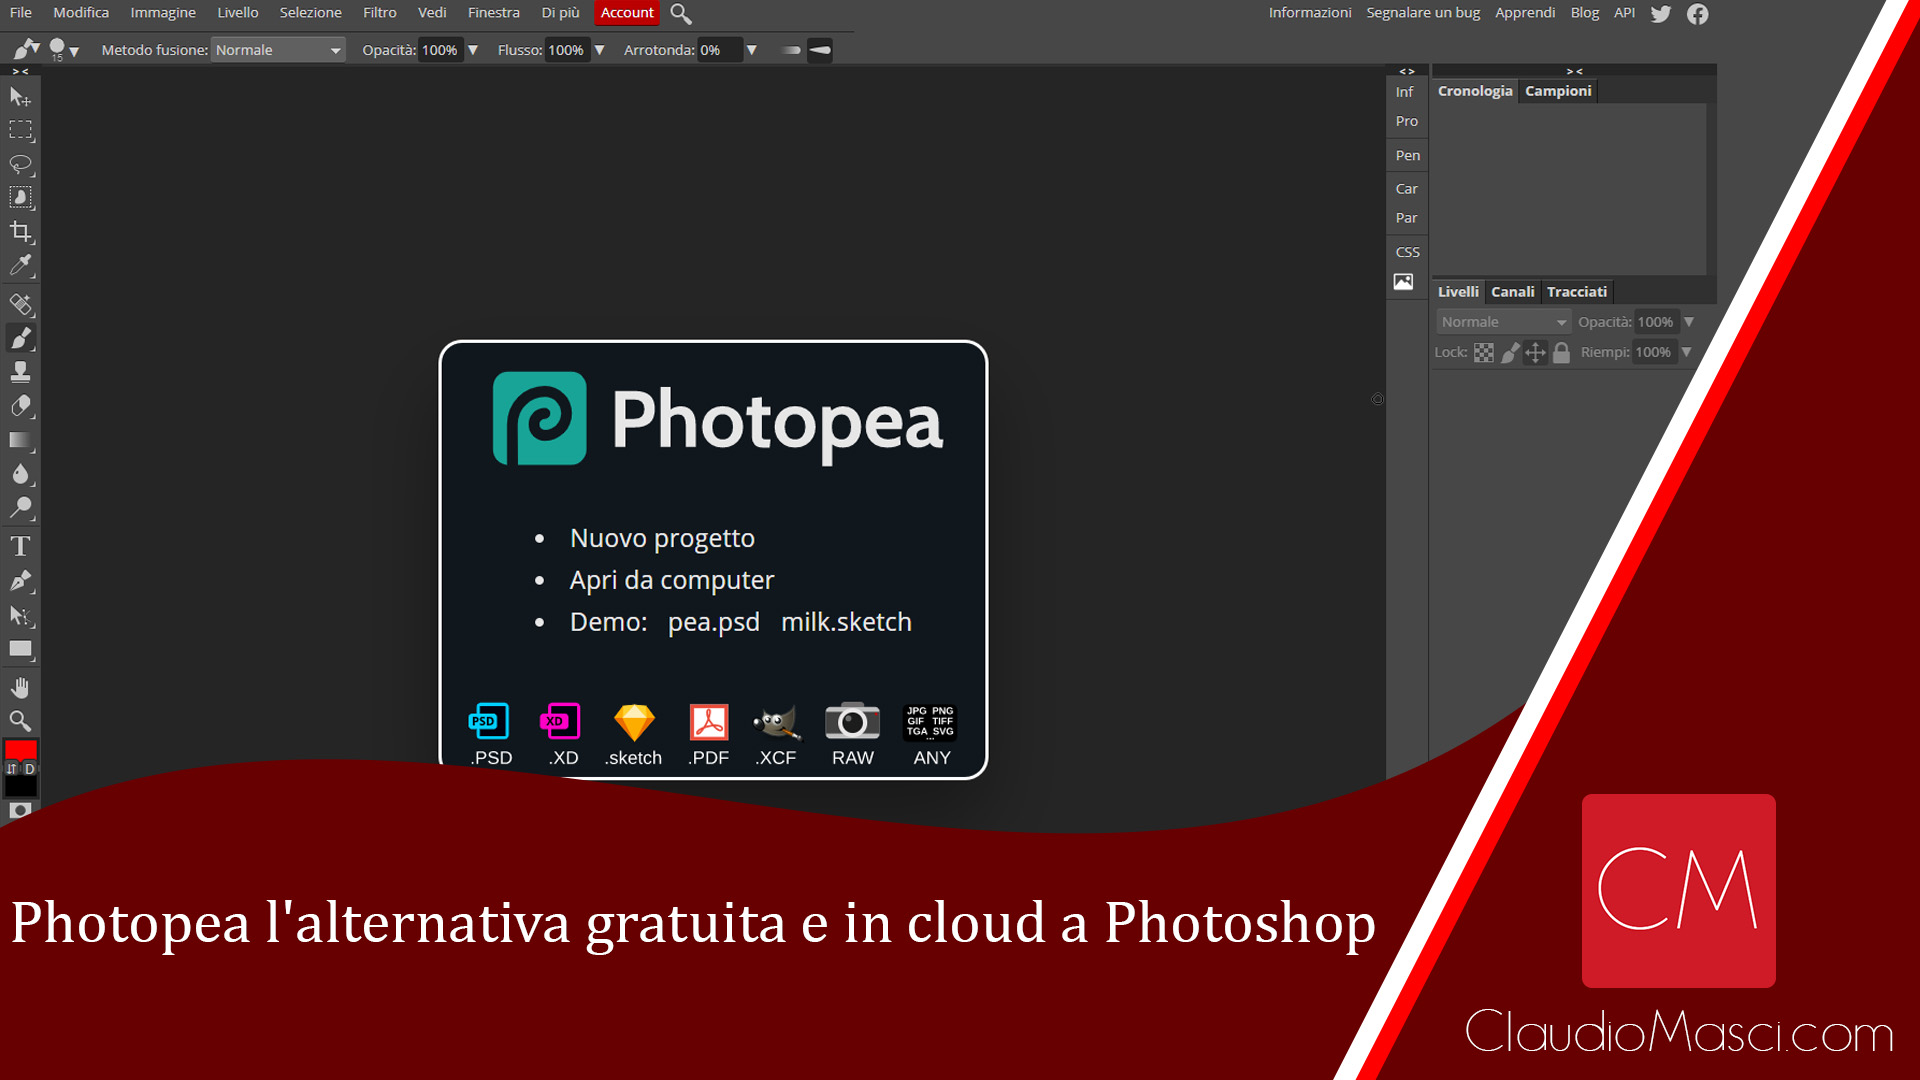 Photopea l’alternativa gratuita e cloud a Photoshop